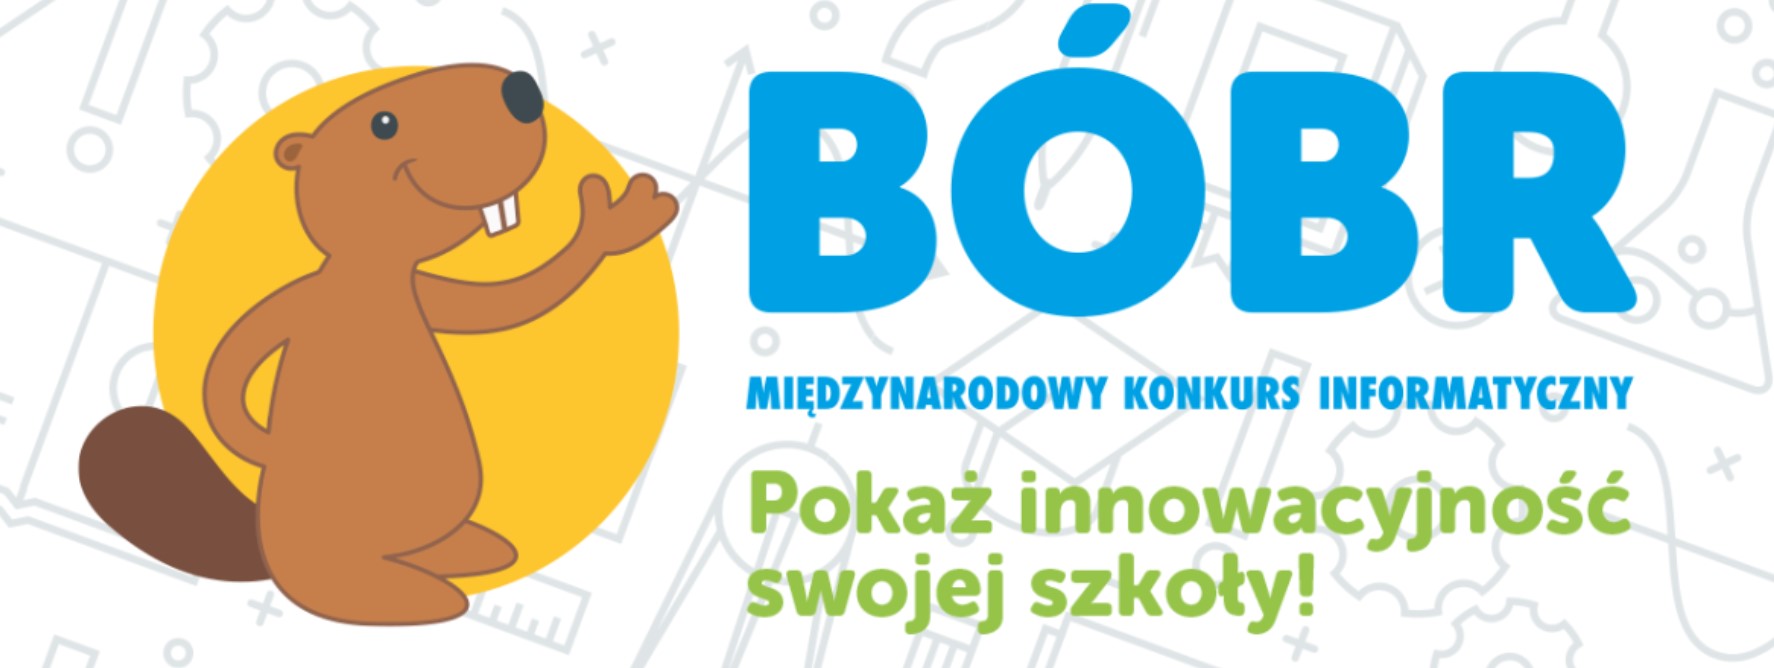 Logo konkursu Bobr